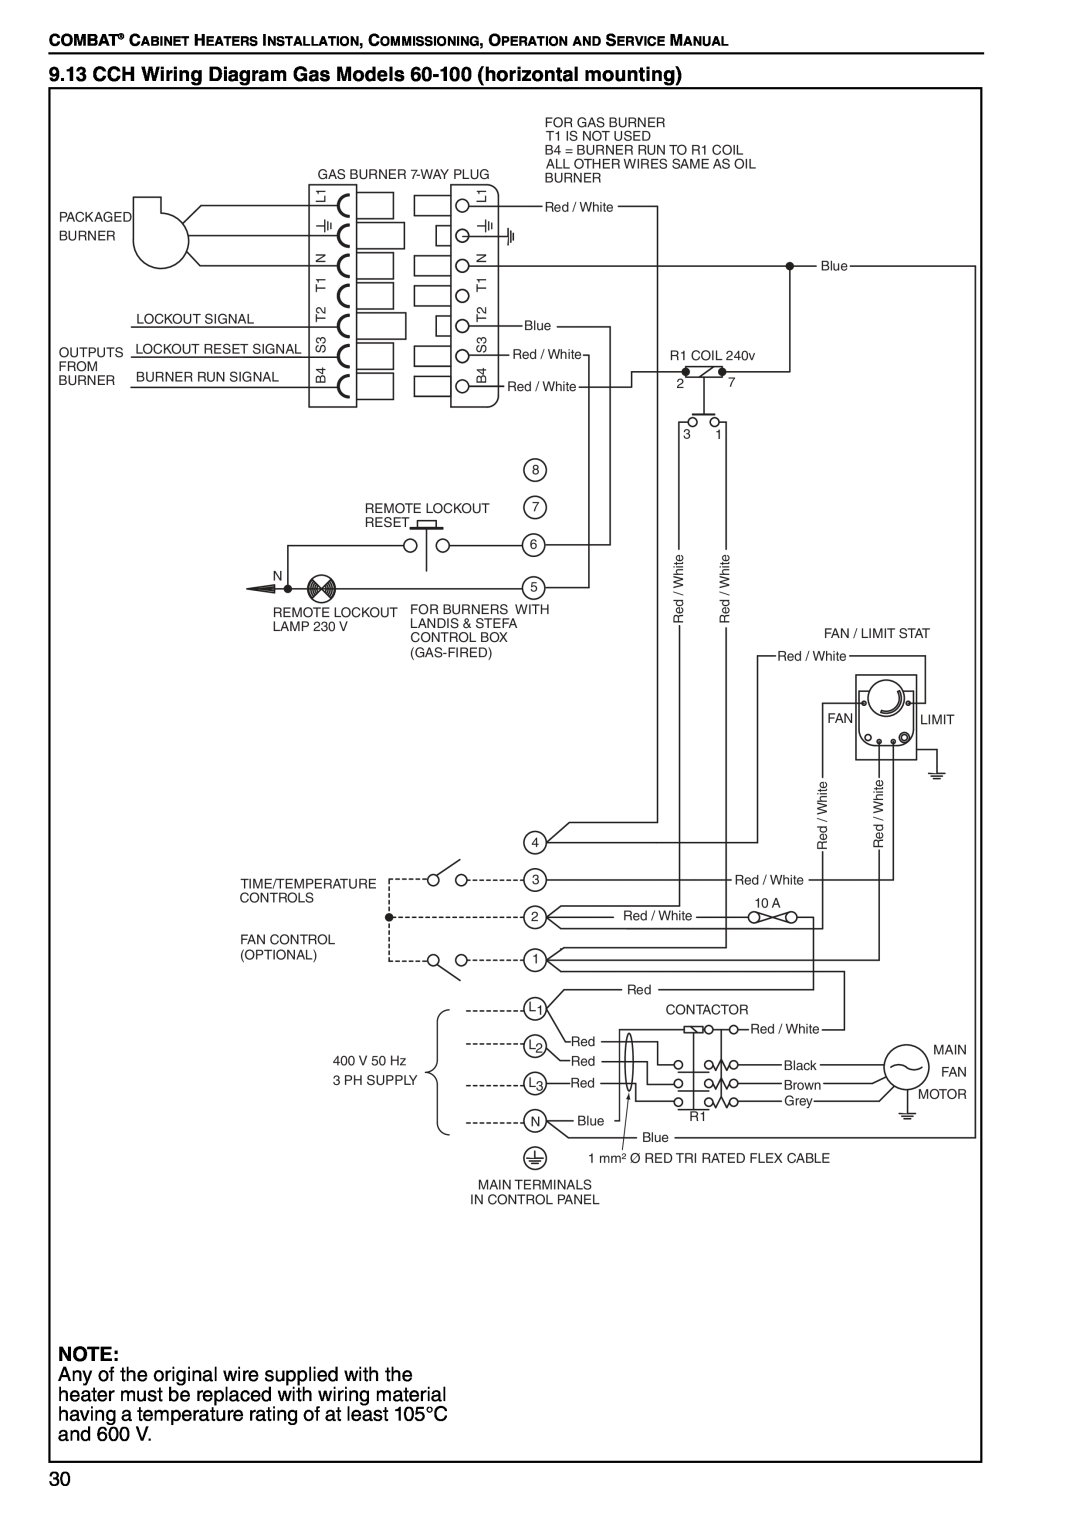 Roberts Gorden POP-ECA/PGP-ECA 015 to 0100 service manual CCH Wiring Diagram Gas Models 60-100 horizontal mounting 